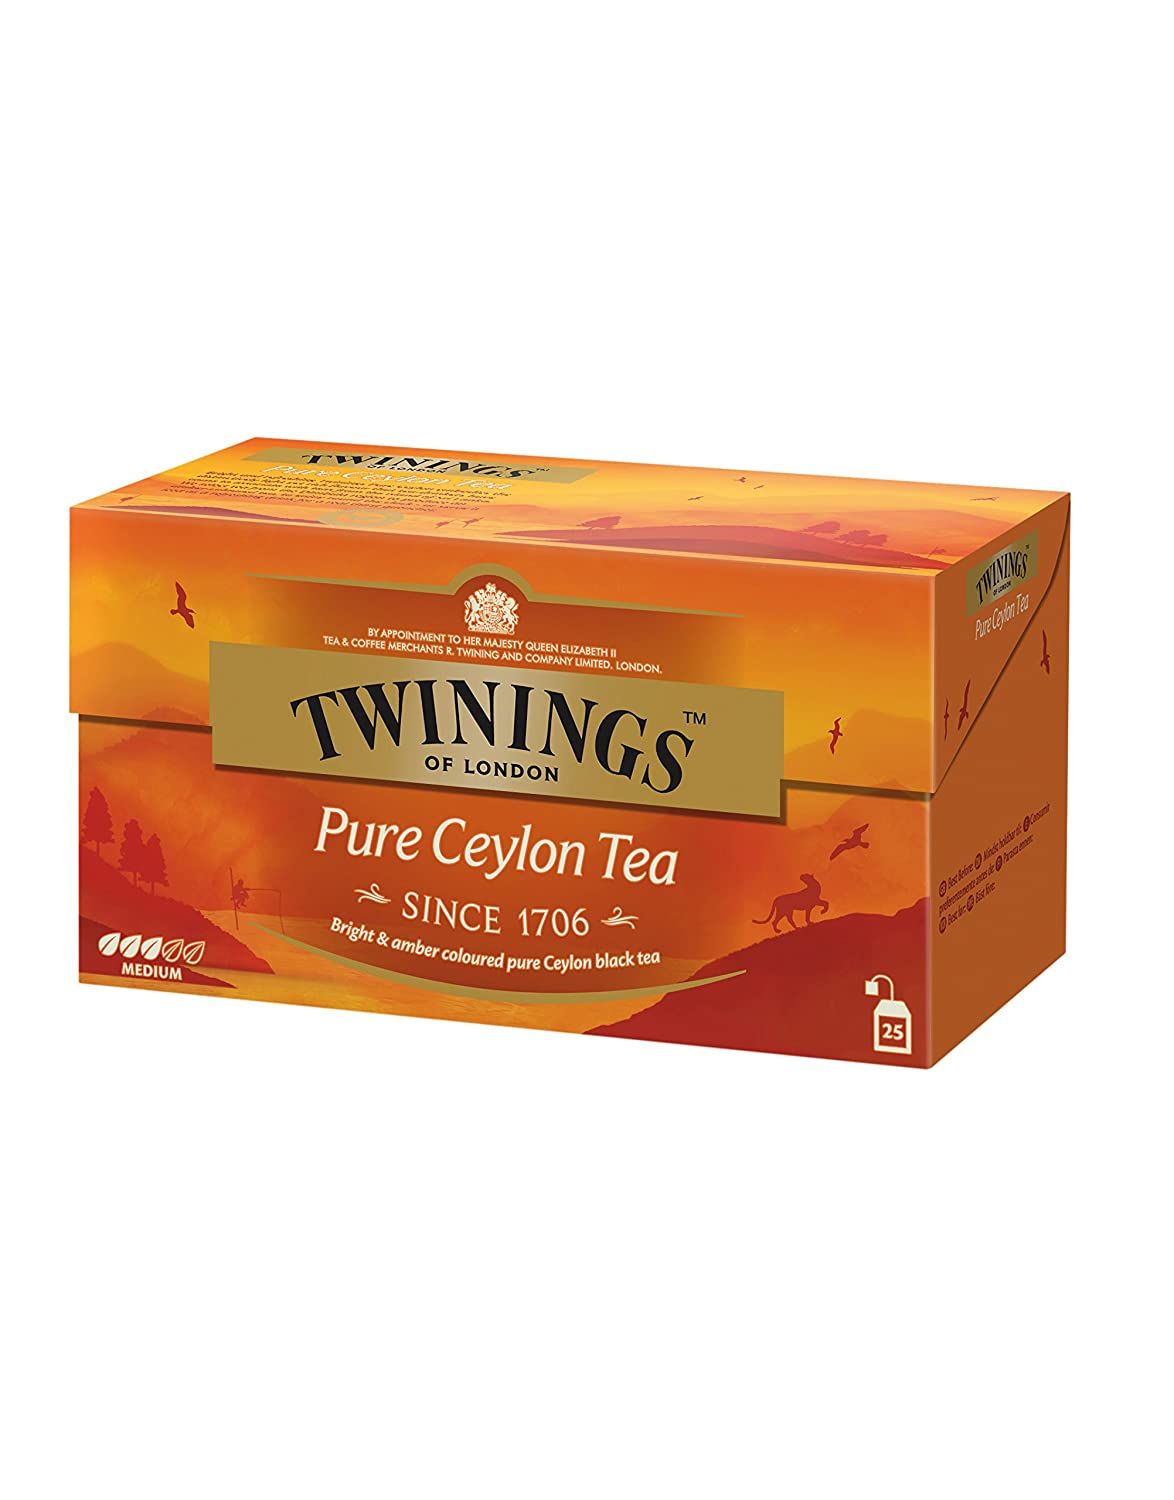 Twinings Pure Ceylon Tea Image